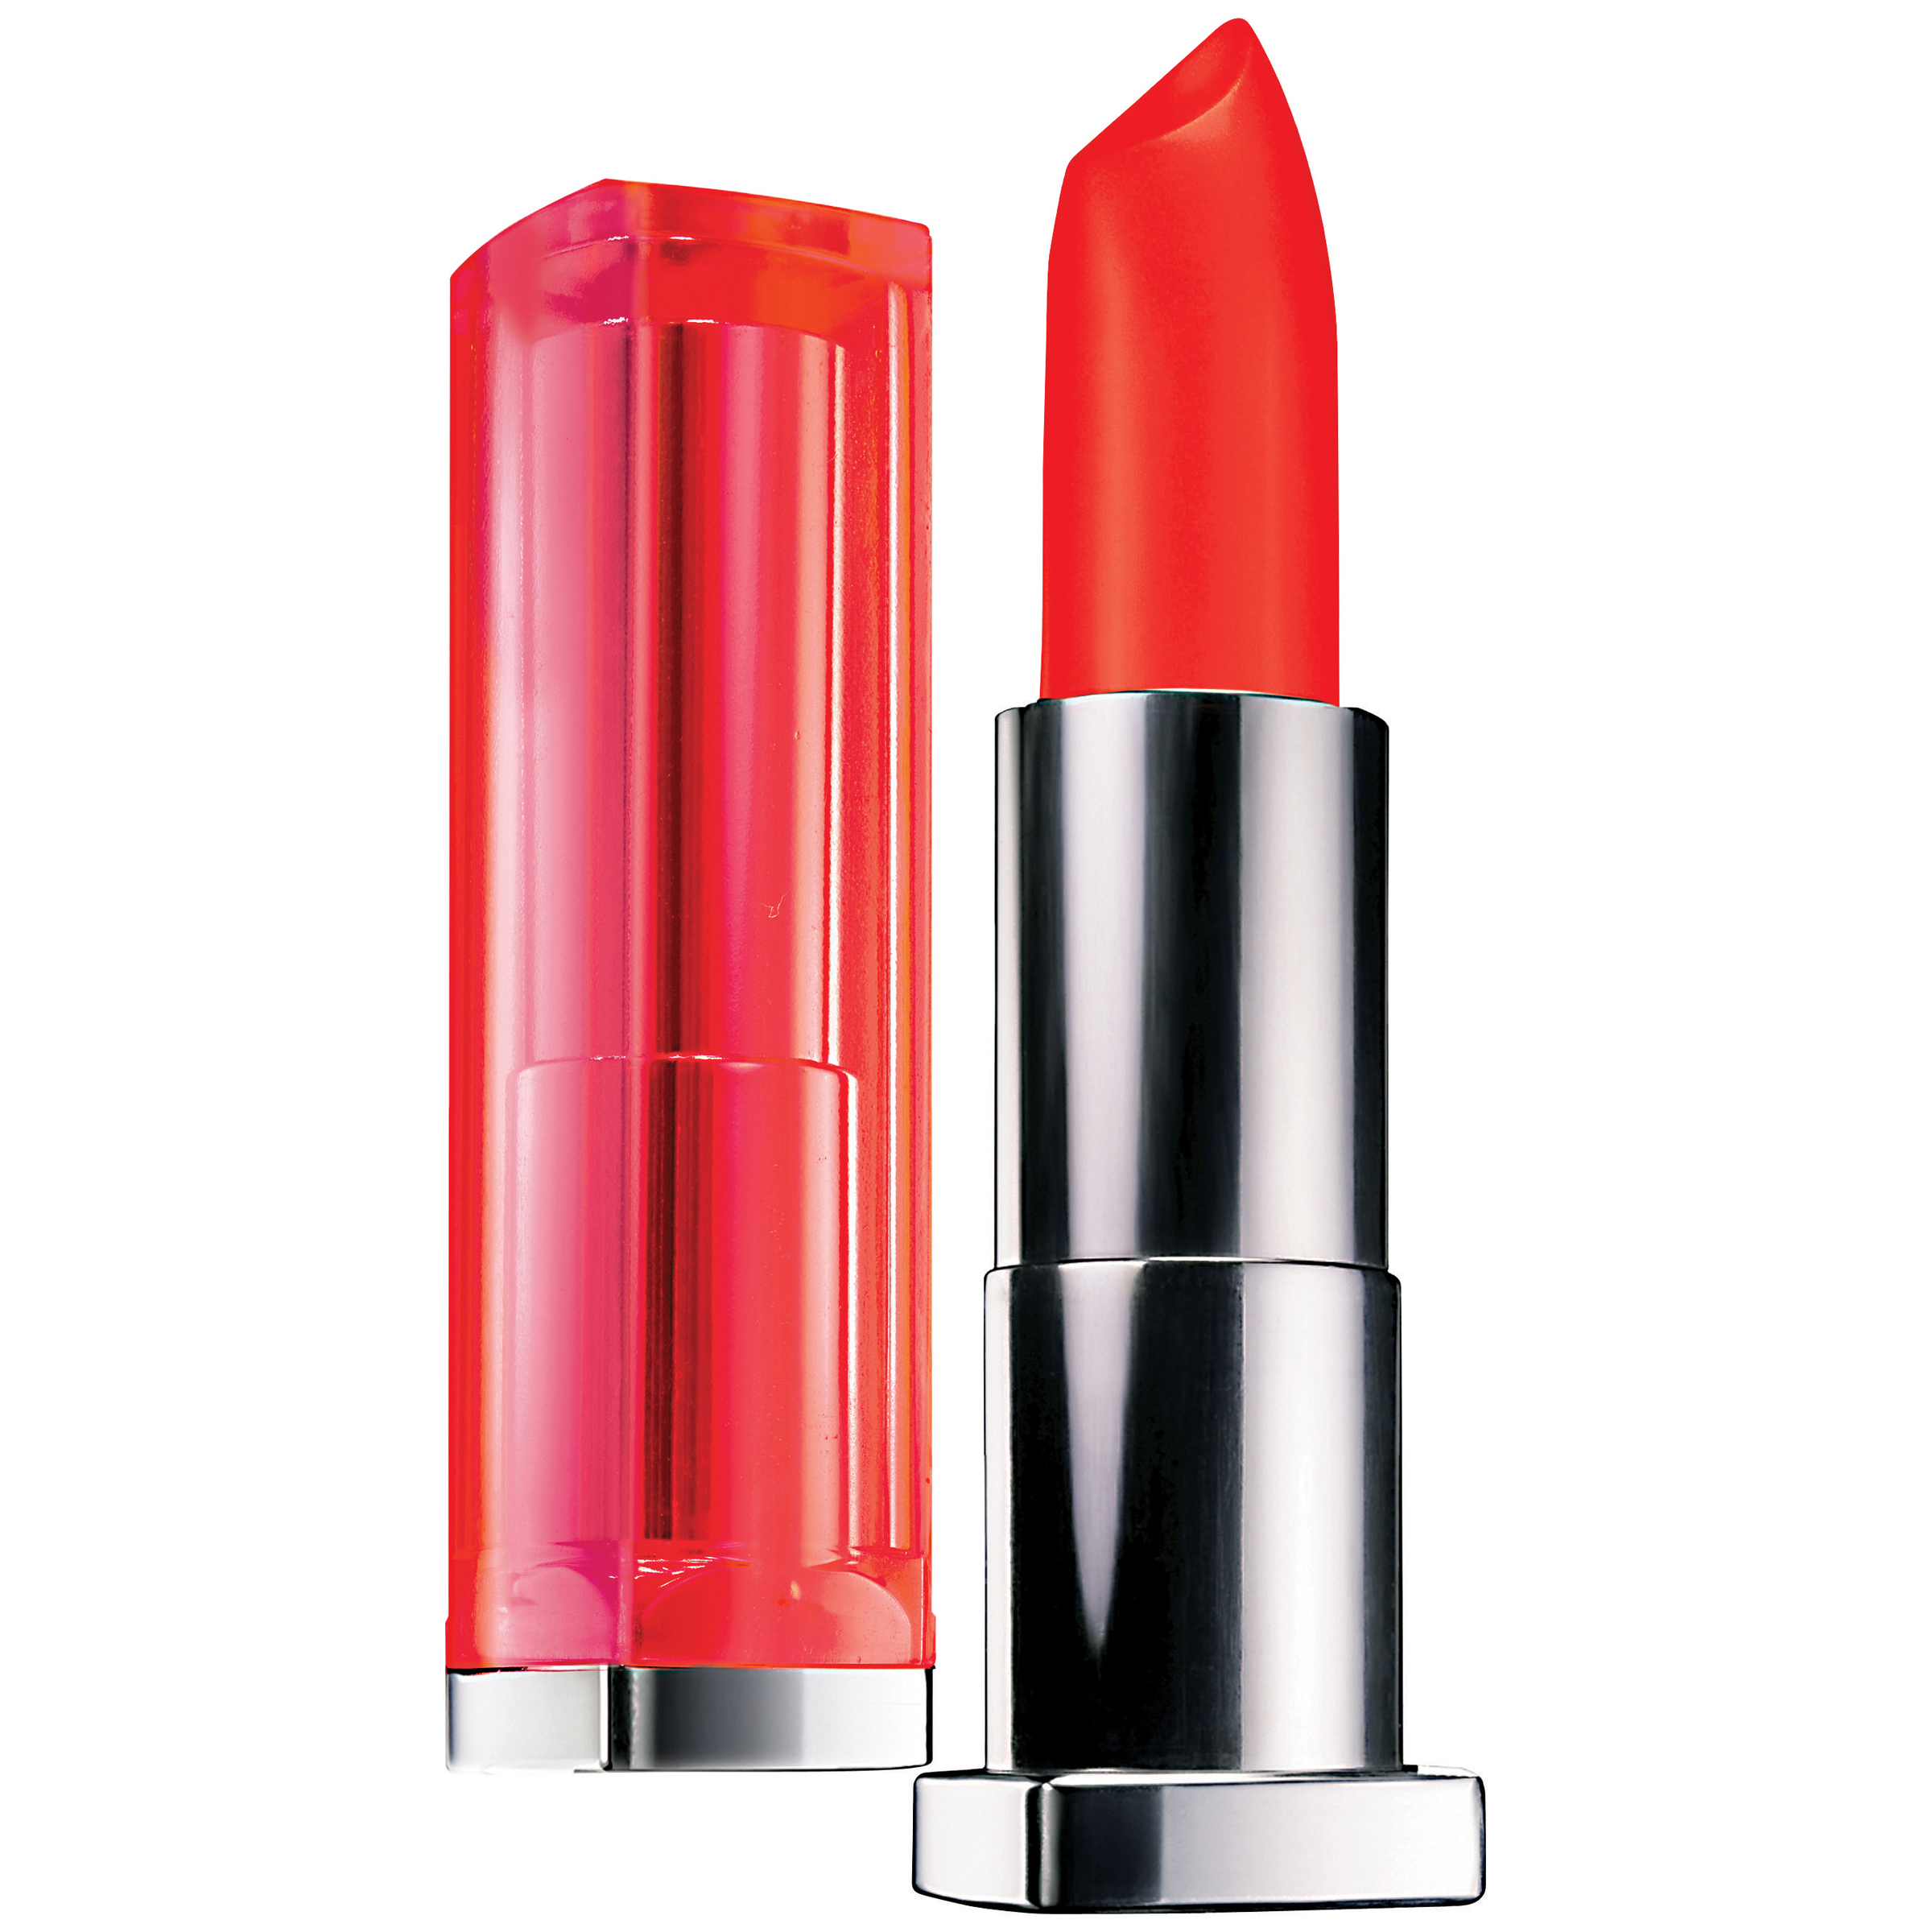 Gorgeous lipsticks for everyday wear.